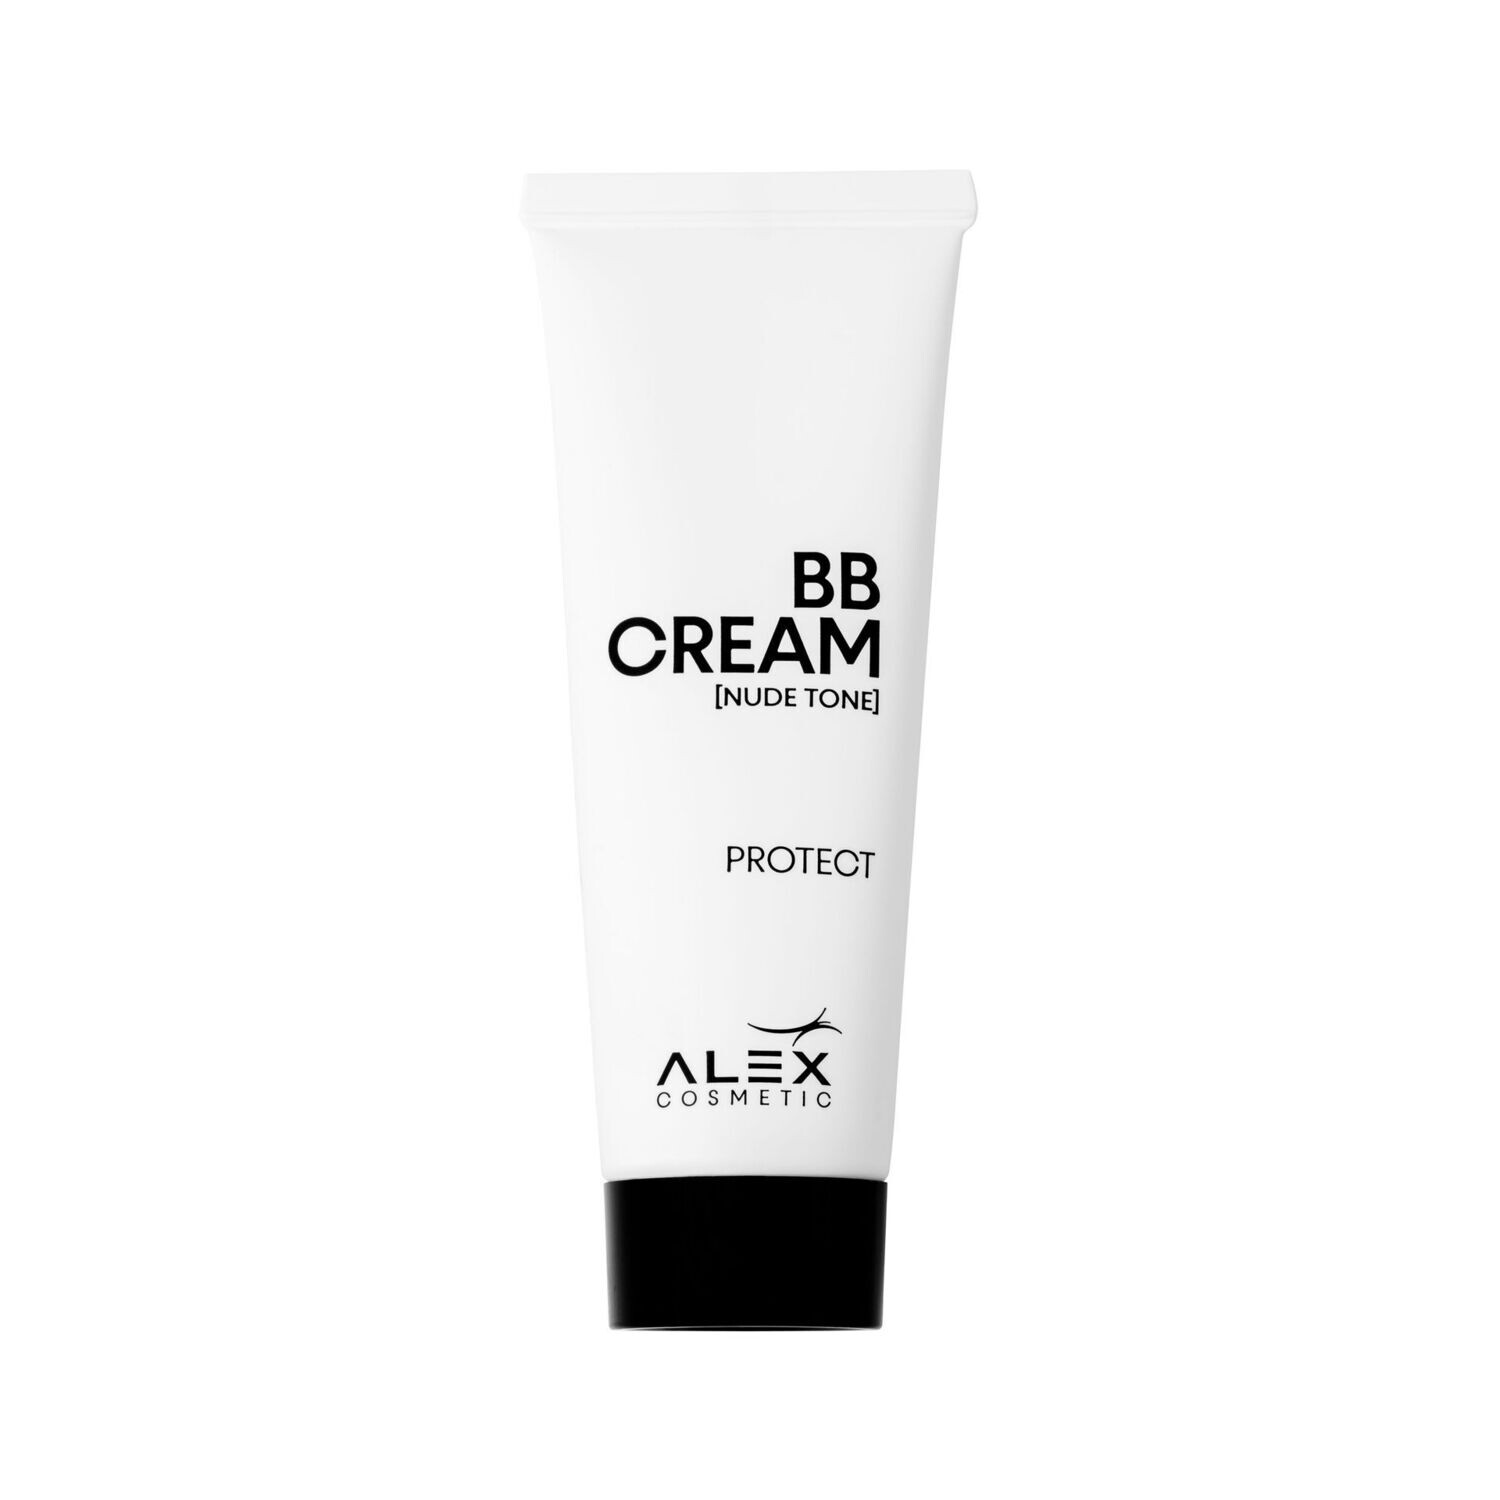 BB Cream [Nude Tone]
Spezialprodukt